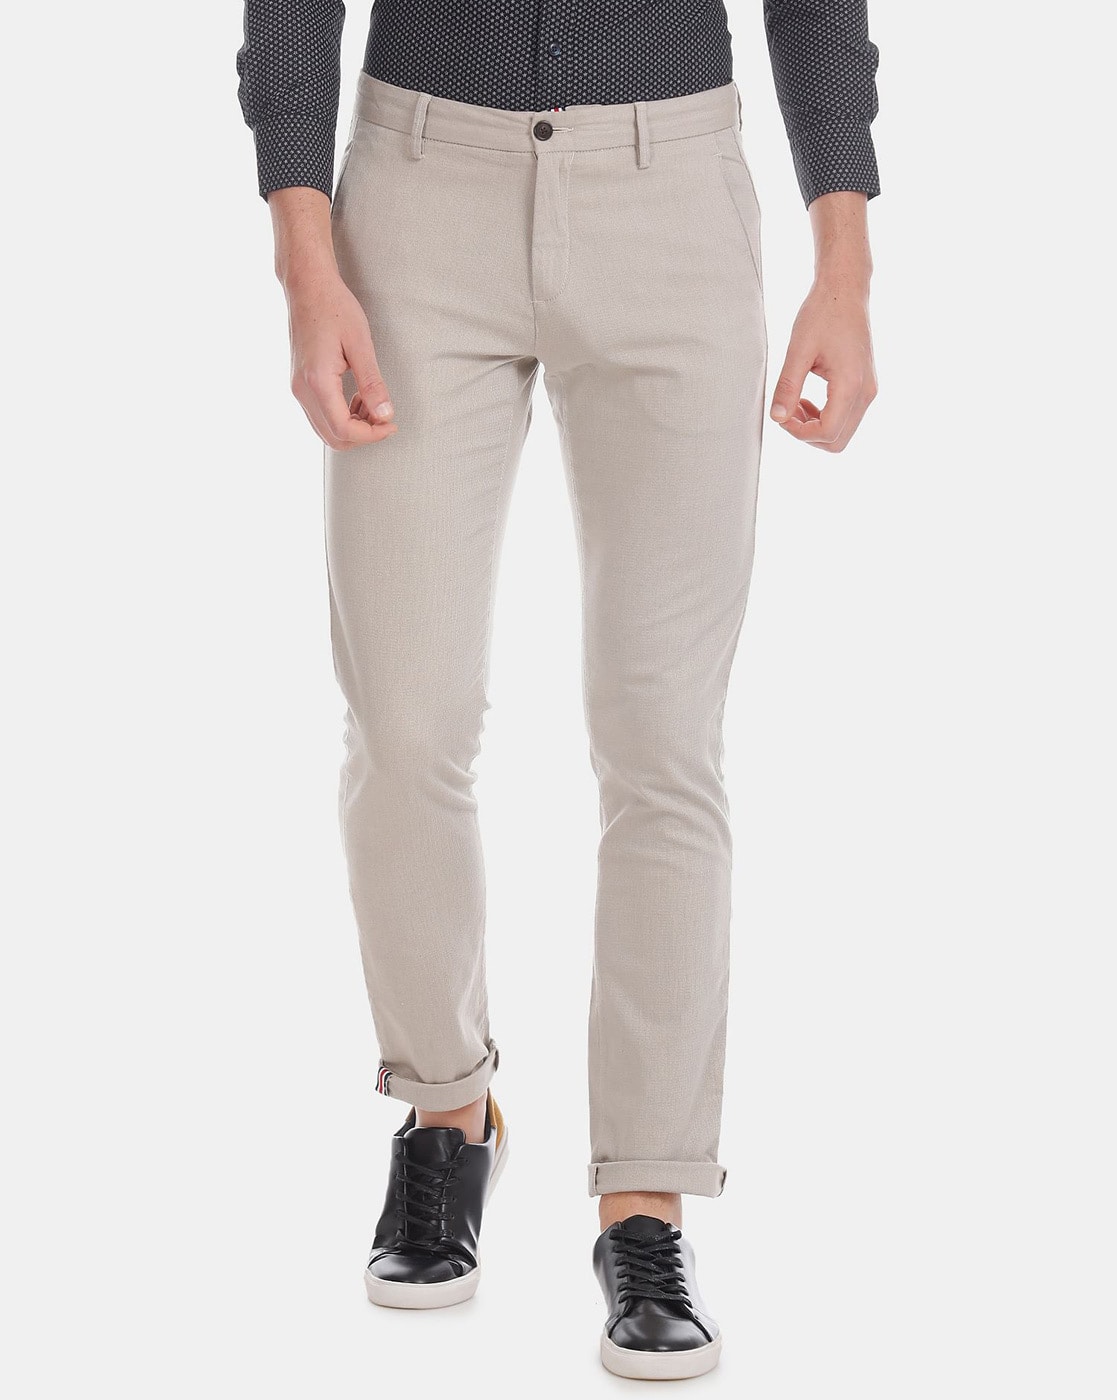 Arrow Sports Men's Slim Fit Pants (ASADTRO2841_Light Grey_30) : Amazon.in:  Fashion